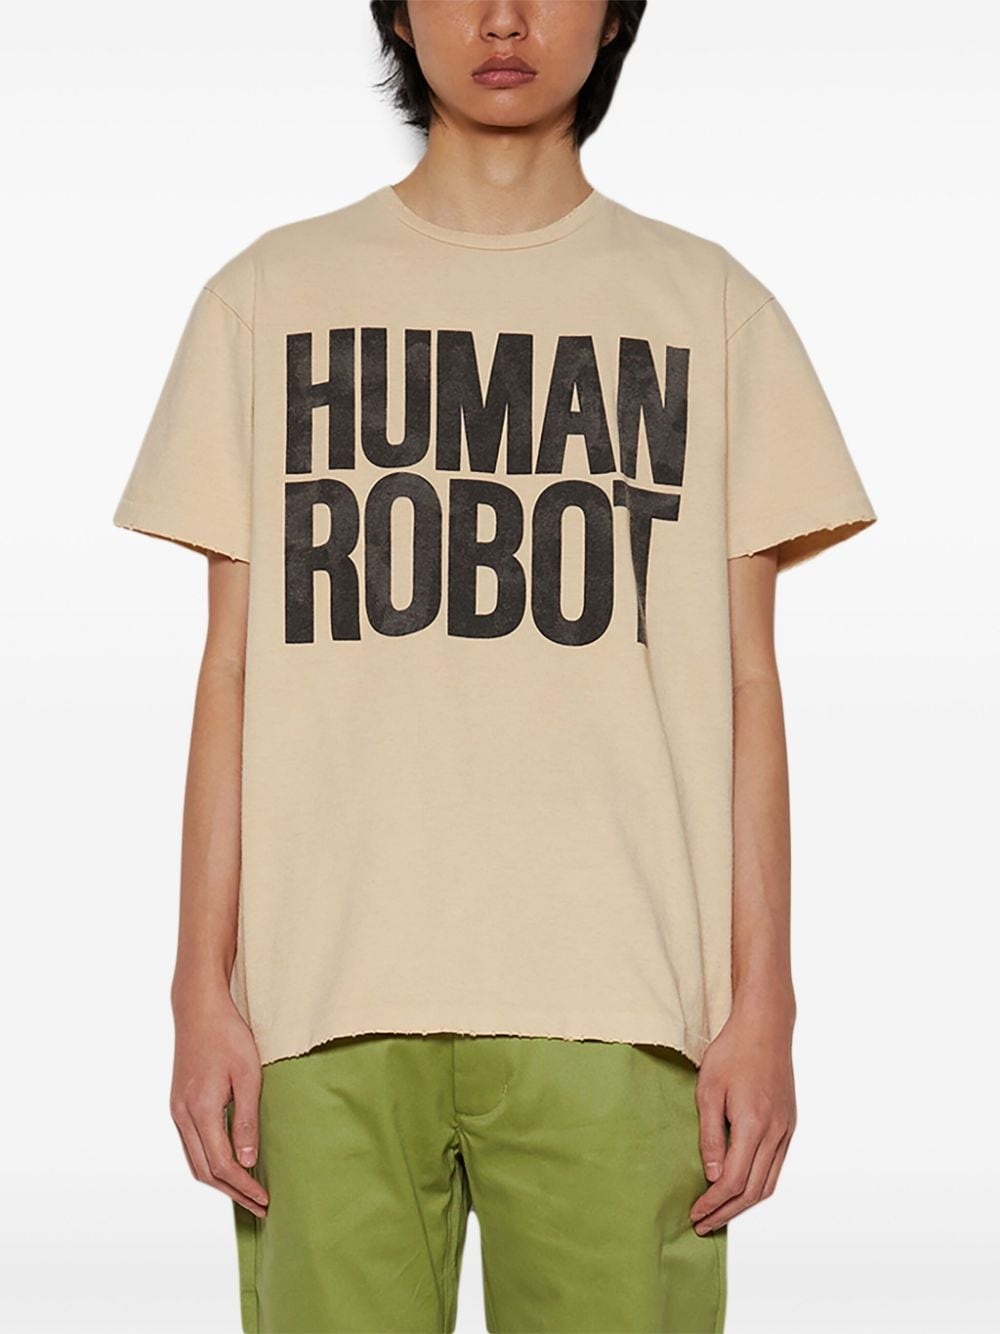 Human Robot cotton T-shirt - 3